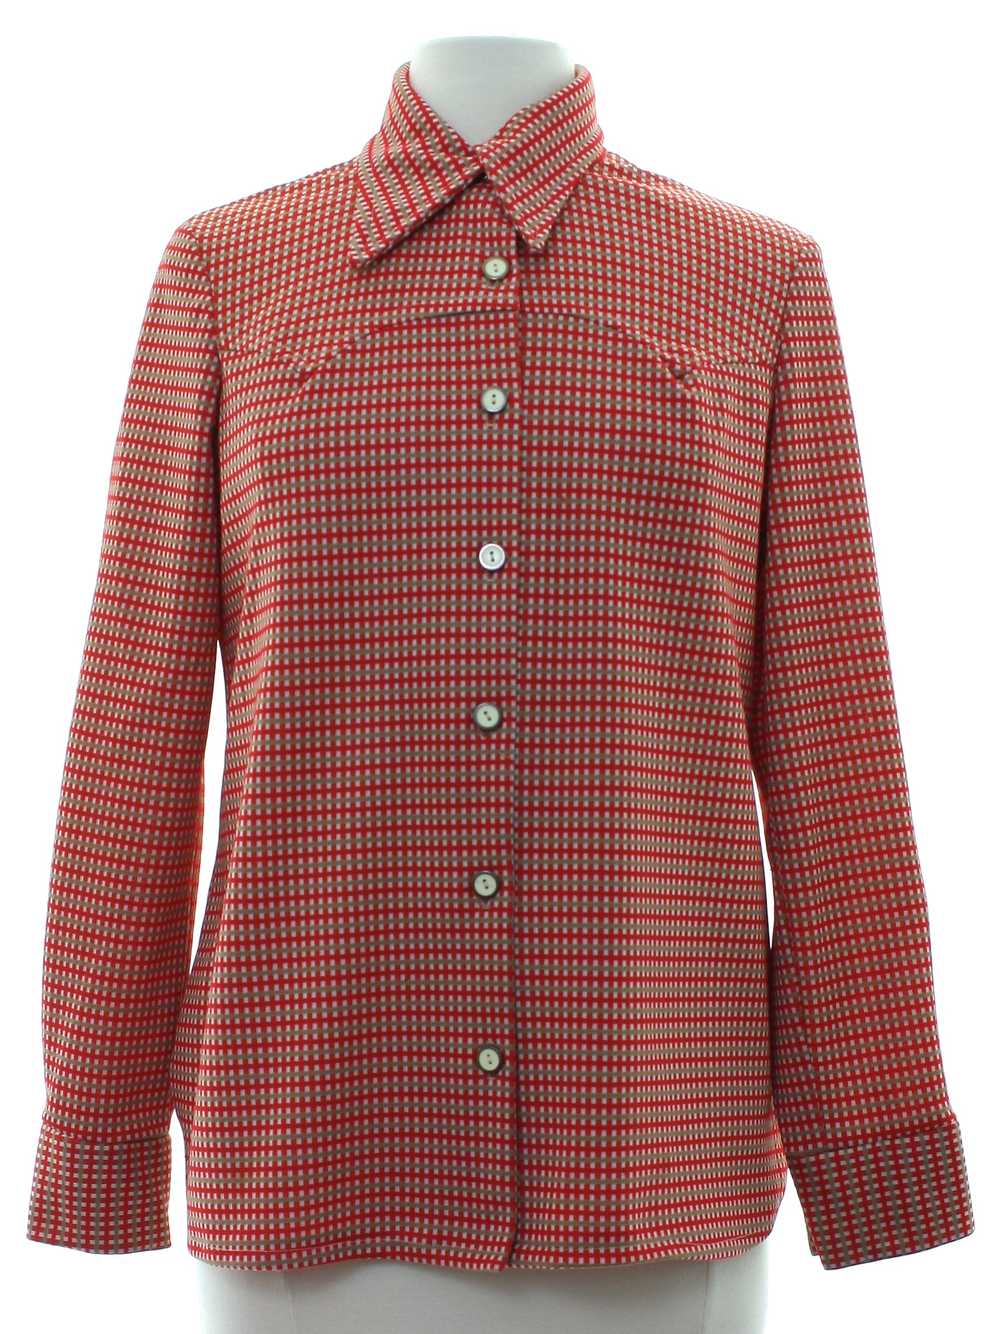 1970's Womens Knit Western Style Shirt jacket - image 1